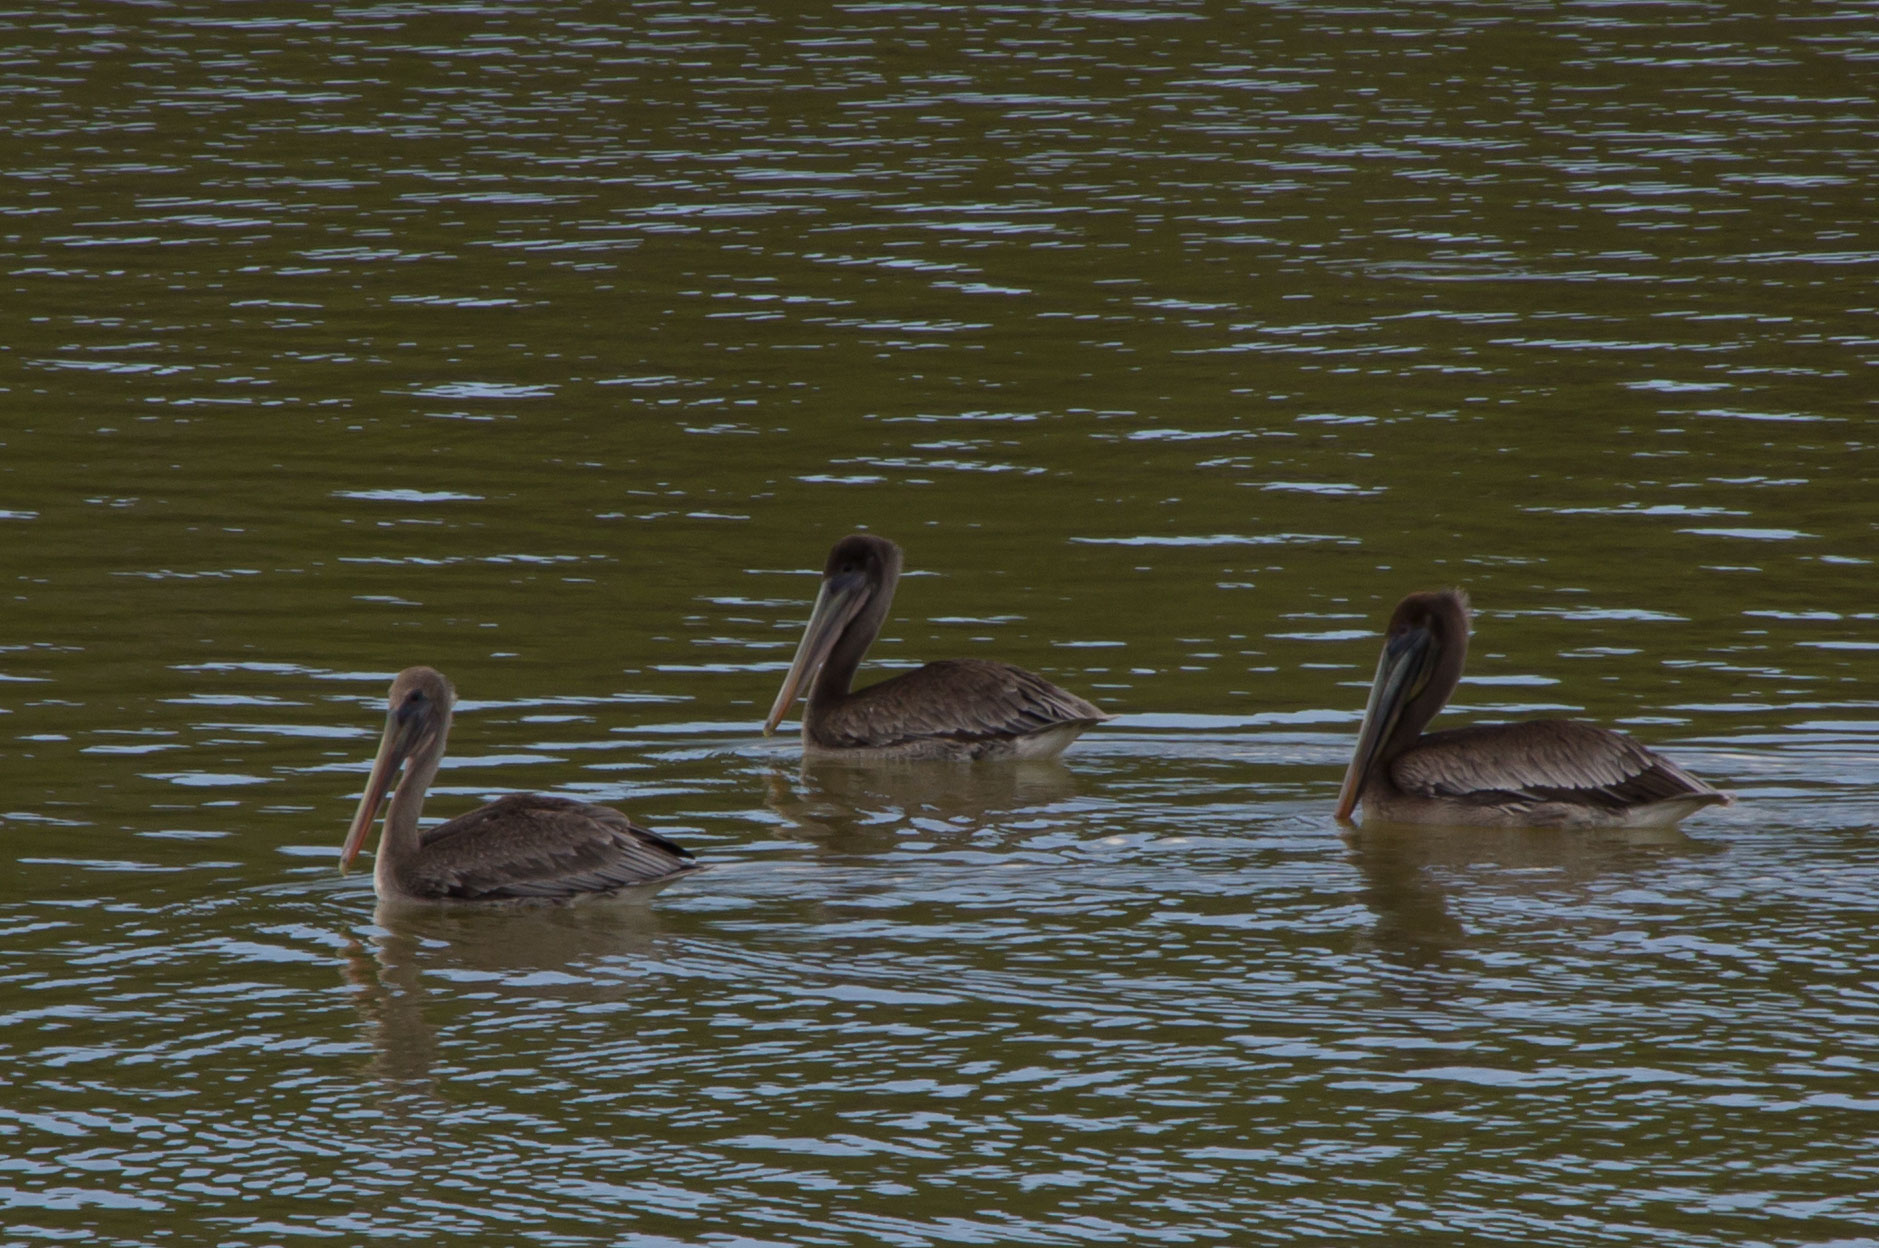 three large black birds swimming on a pond